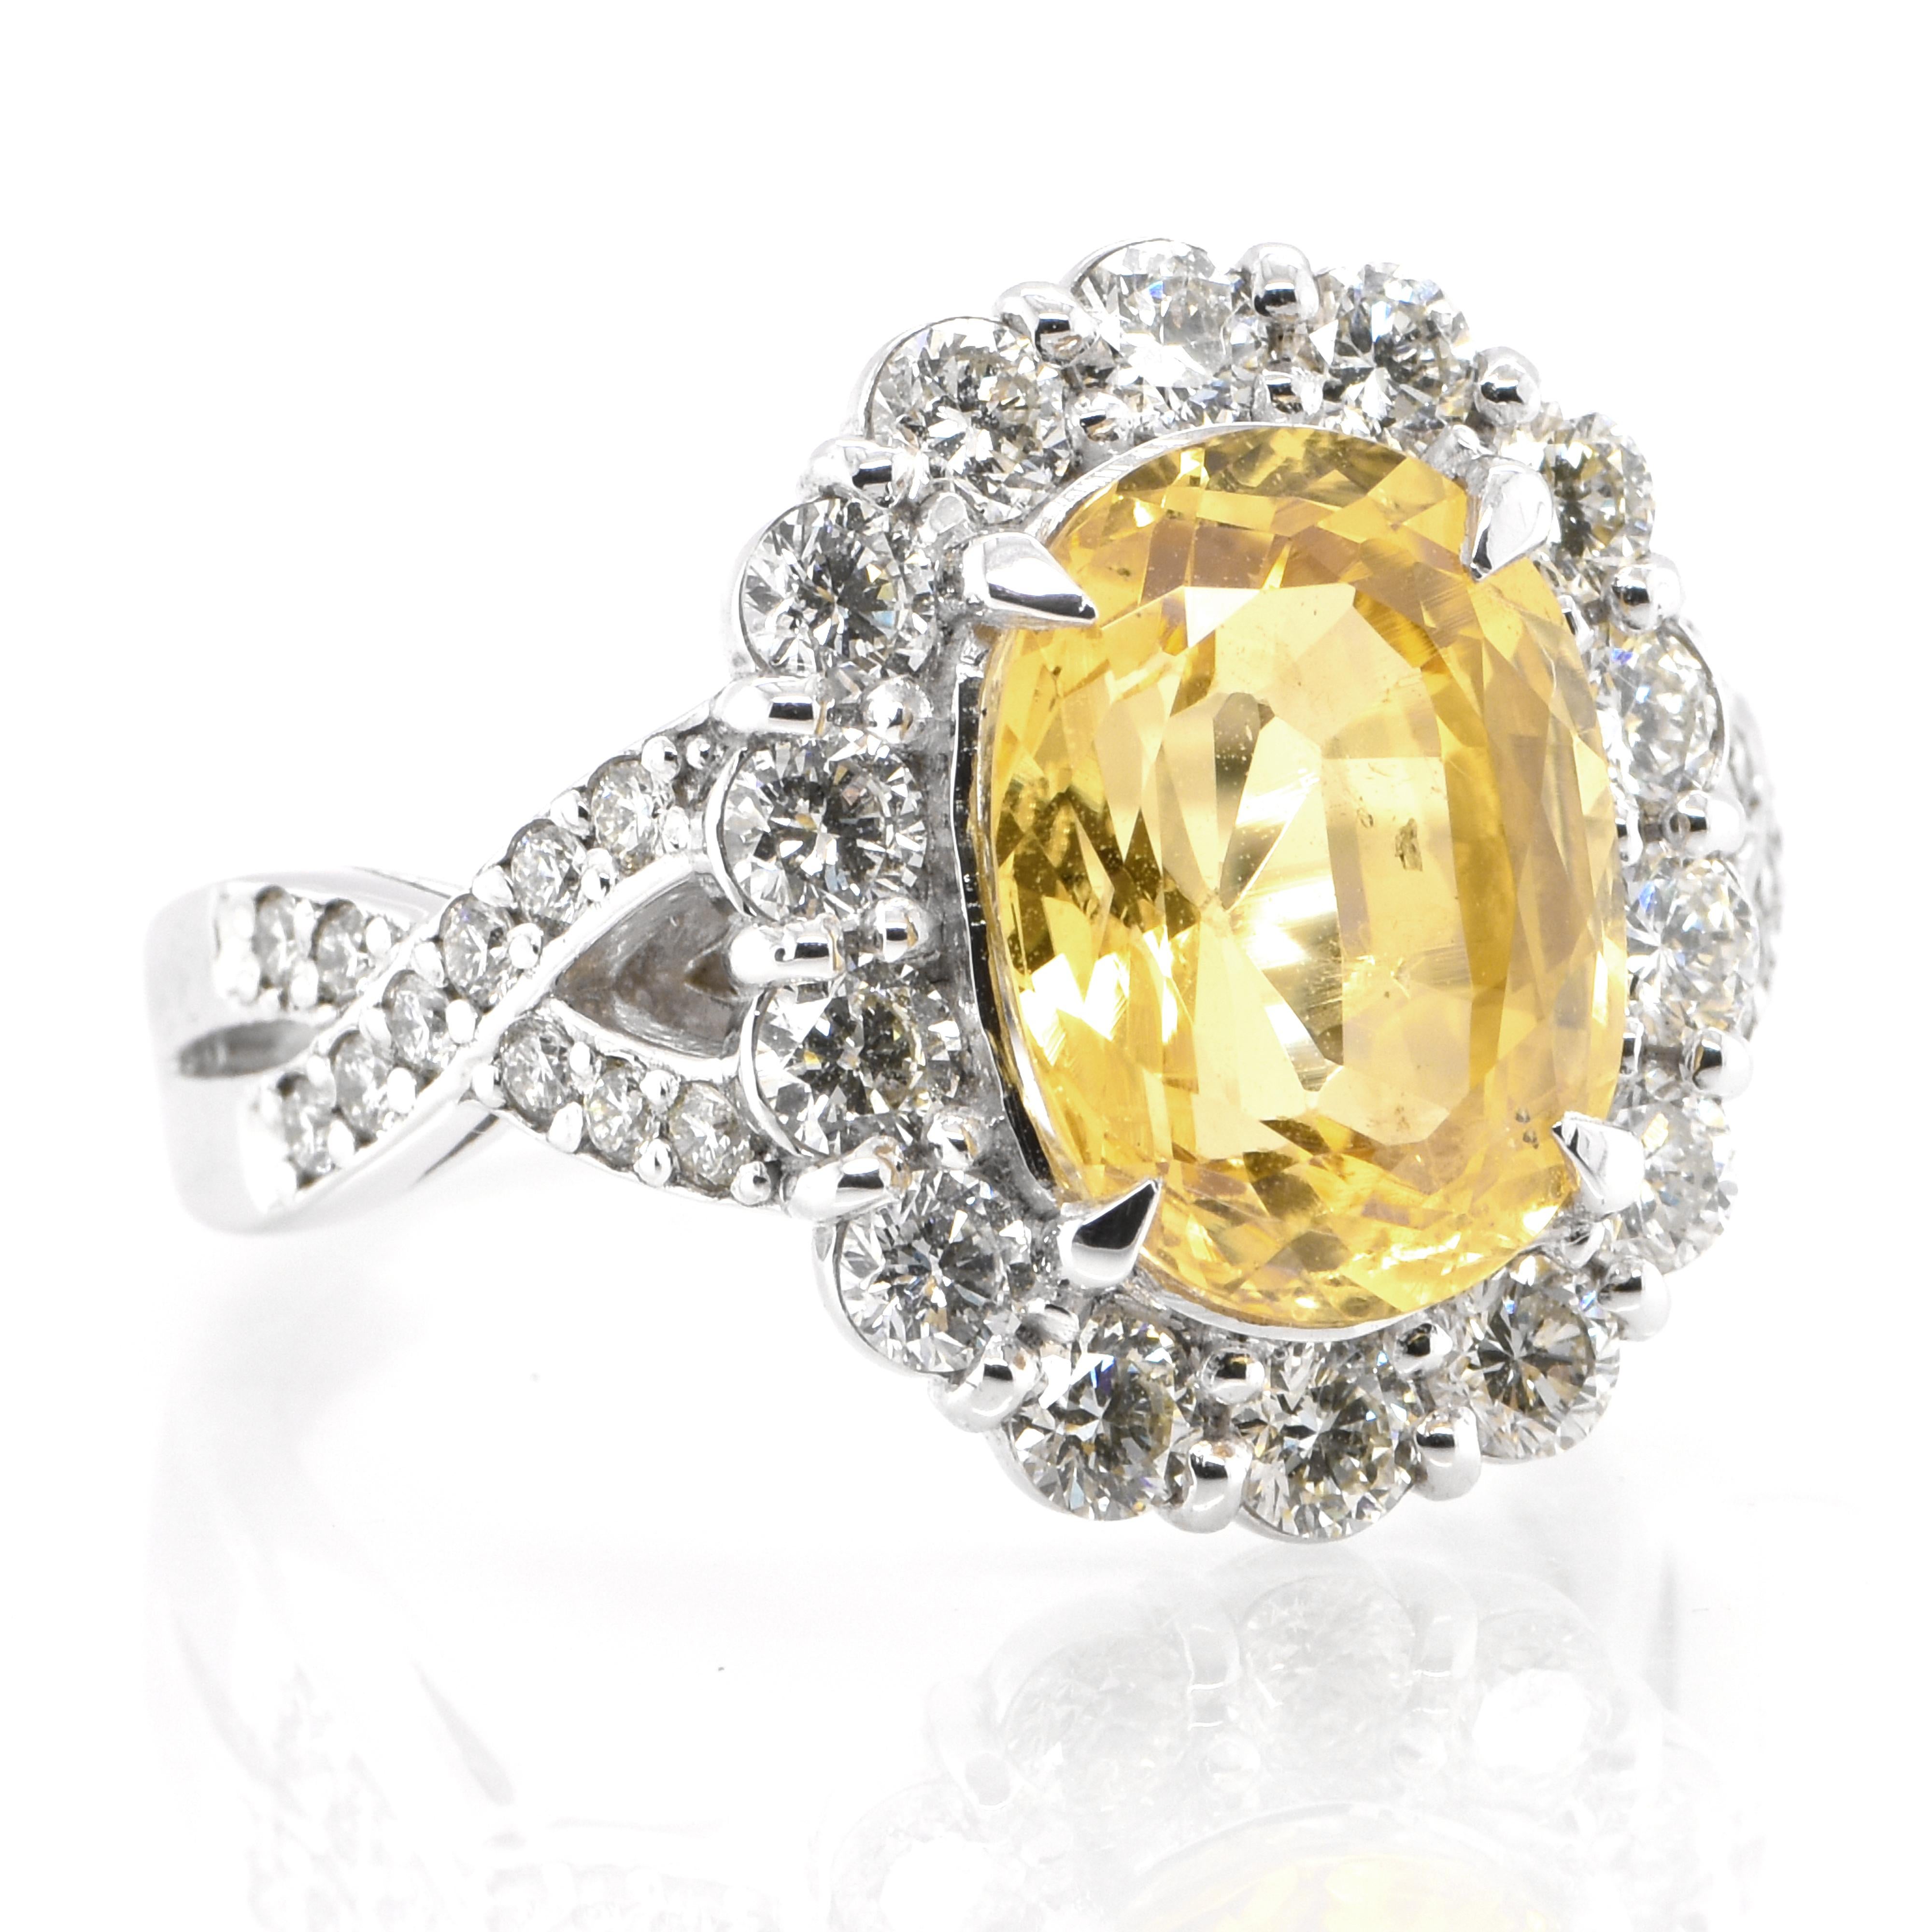 Modern Gia Certified 4.90 Carat Natural Yellow Sapphire & Diamond Ring Set in Platinum